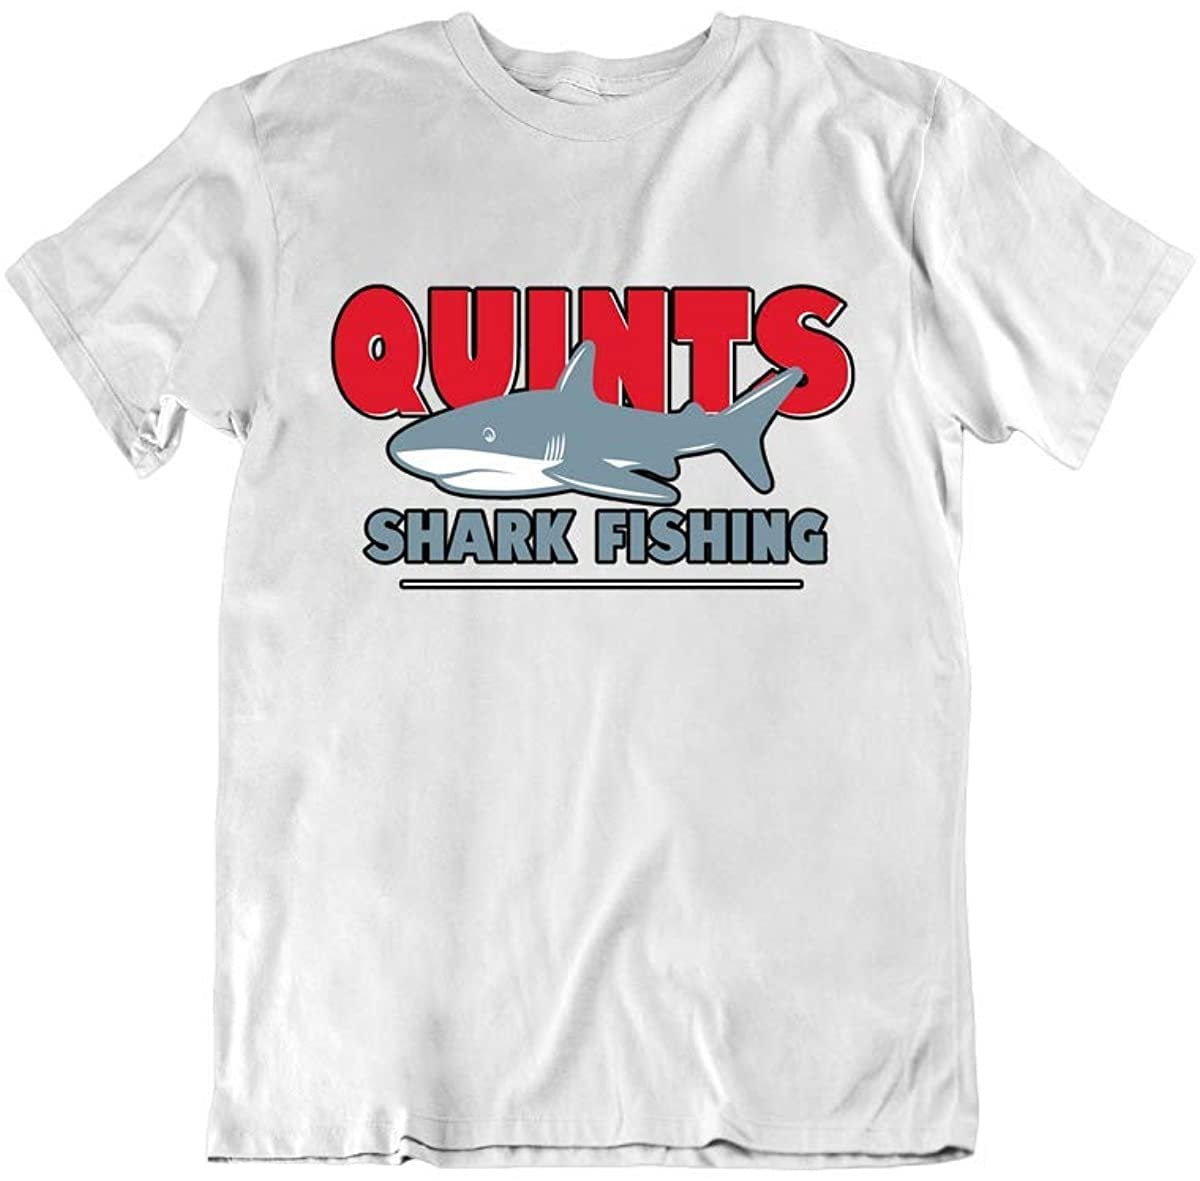 Quints Shark Fishing Funny Novelty Humor Fashion Design Cotton T